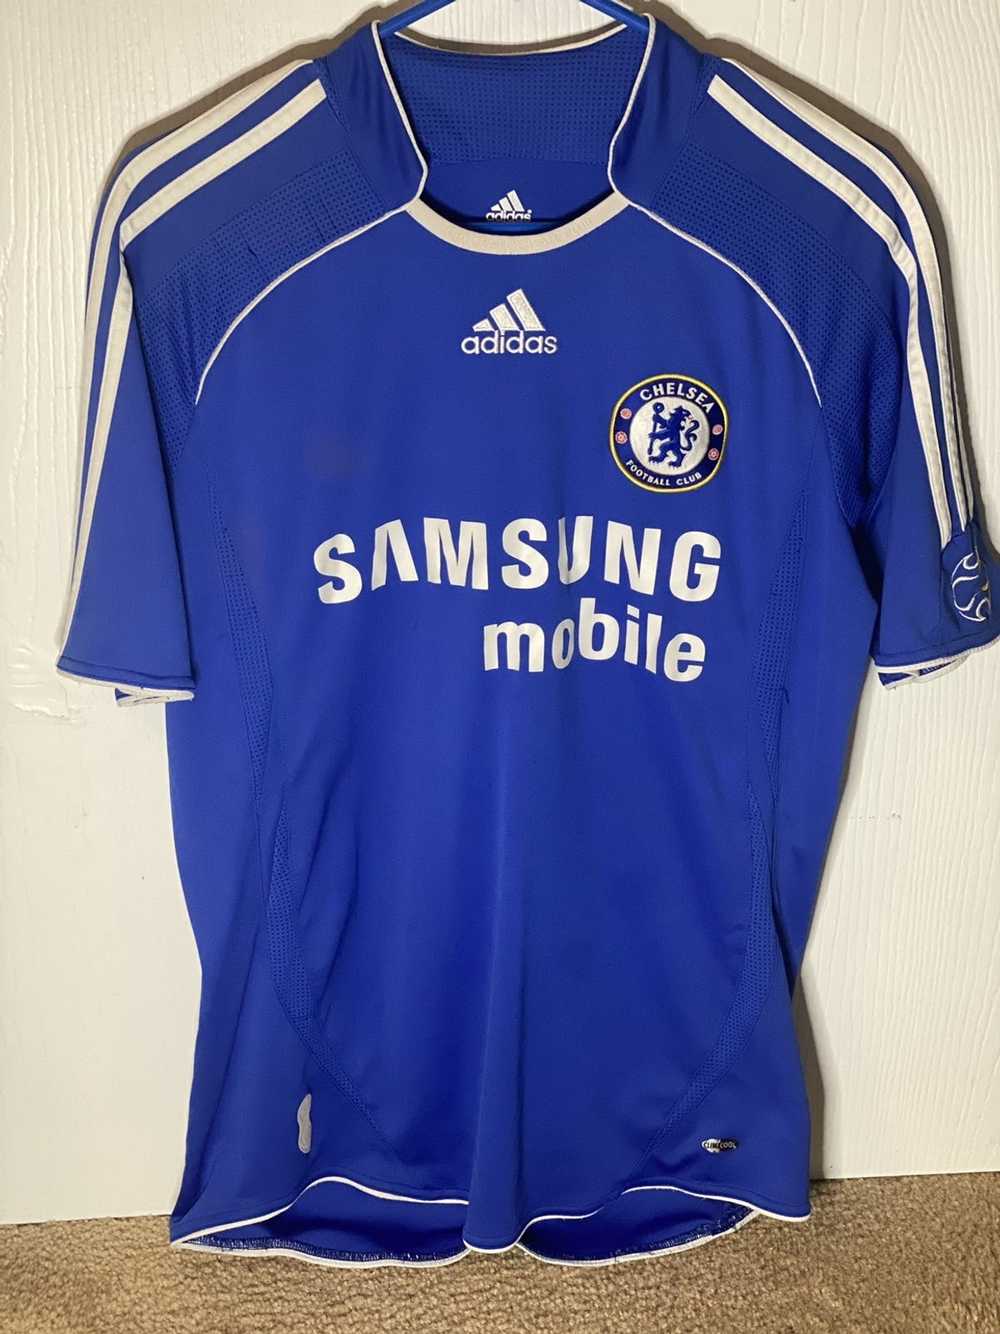 Chelsea UK Football Club Yellow Adidas Samsung Football Soccer Jersey 2XL  FLAWS